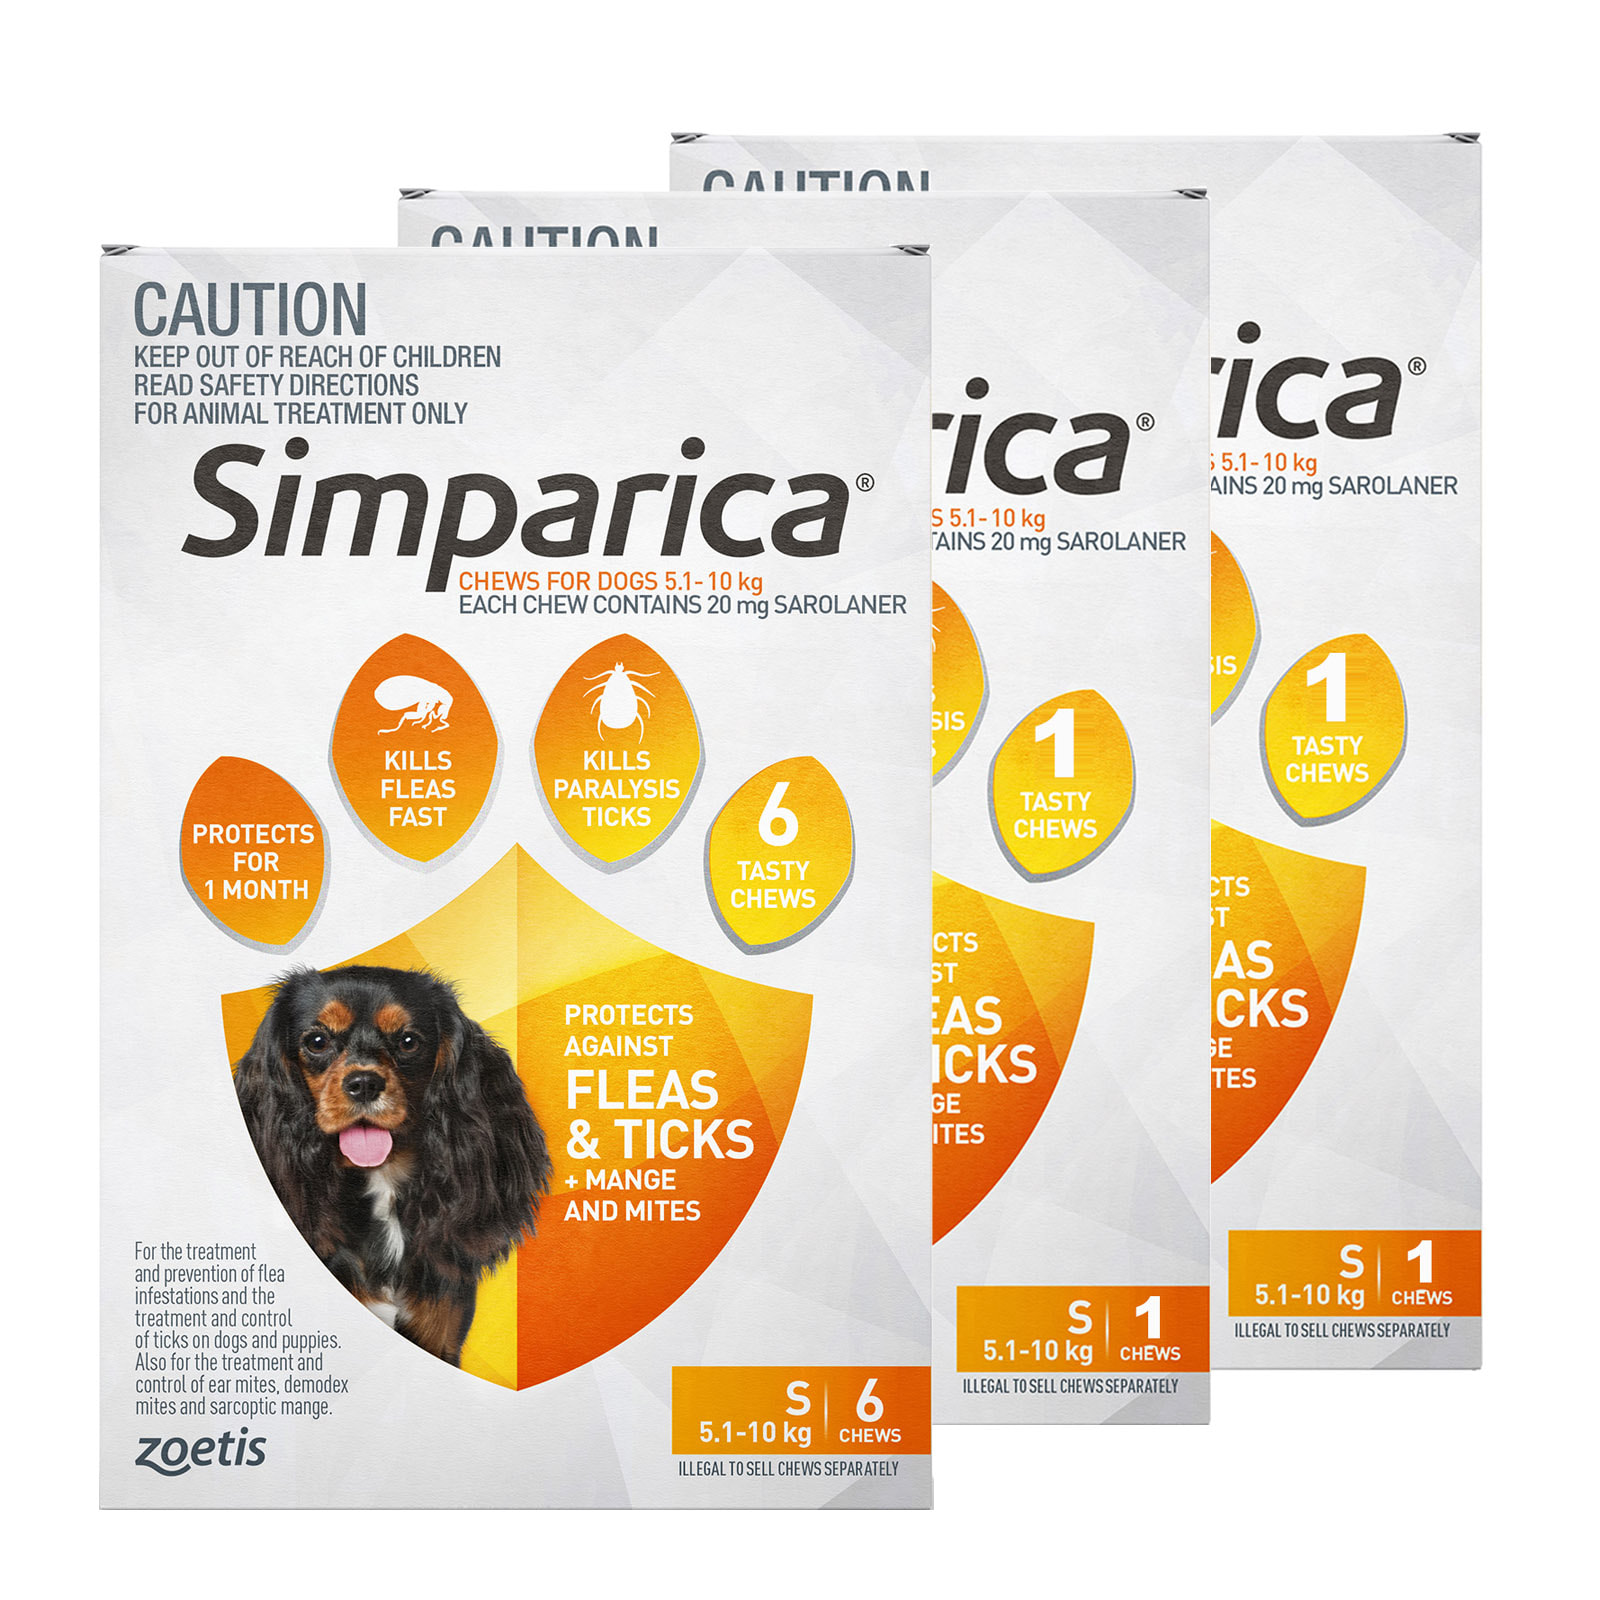 simparica-trio-2-6-5kg-hillside-veterinary-surgery